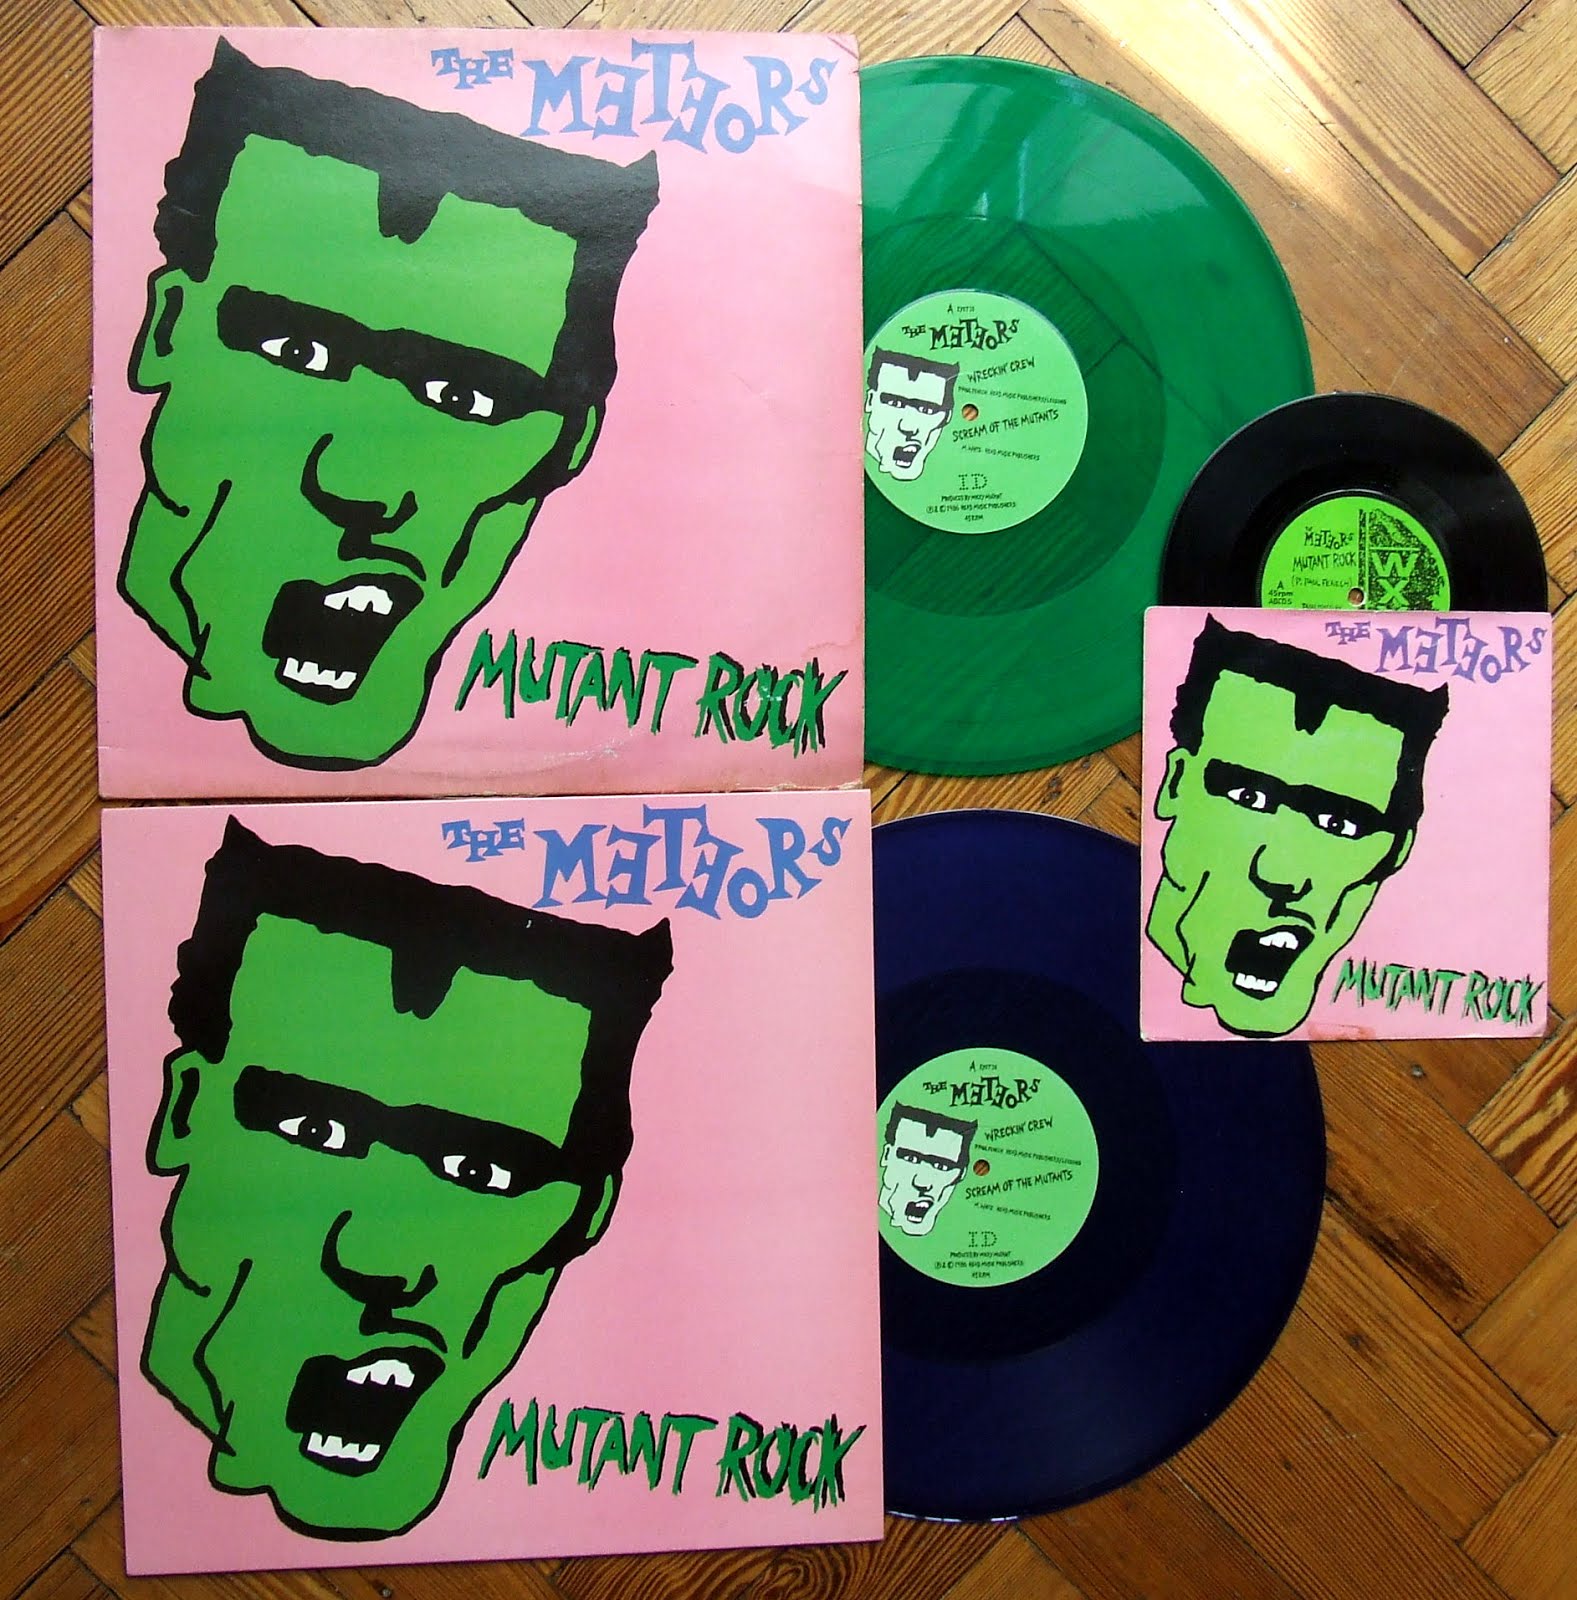 The Meteors - Mutant Rockers !